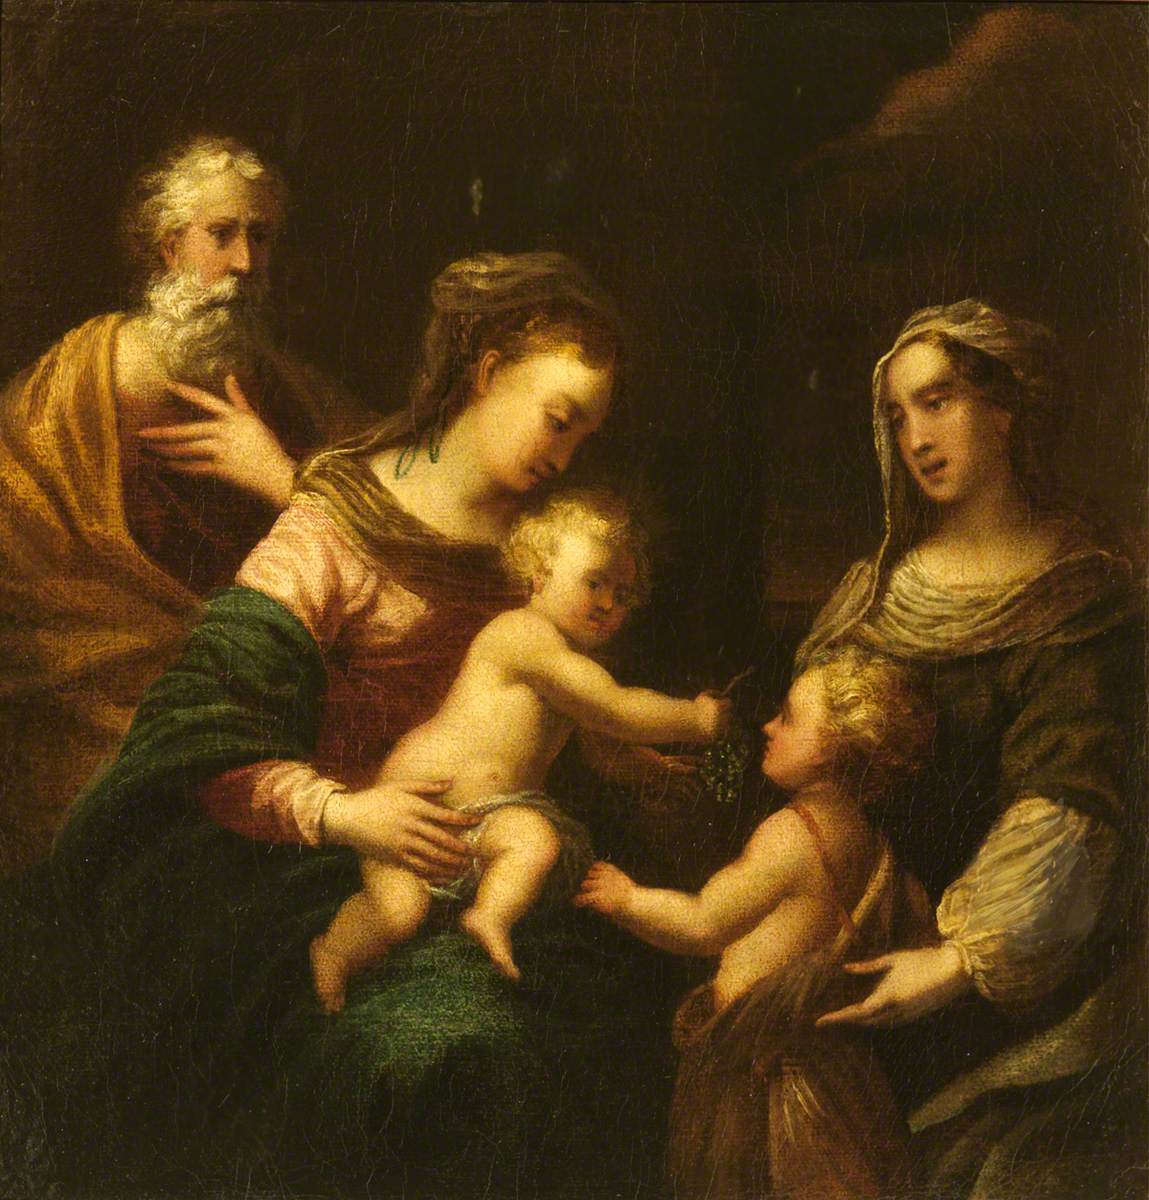 The Holy Family with Saint Elizabeth and the Infant Saint John the Baptist